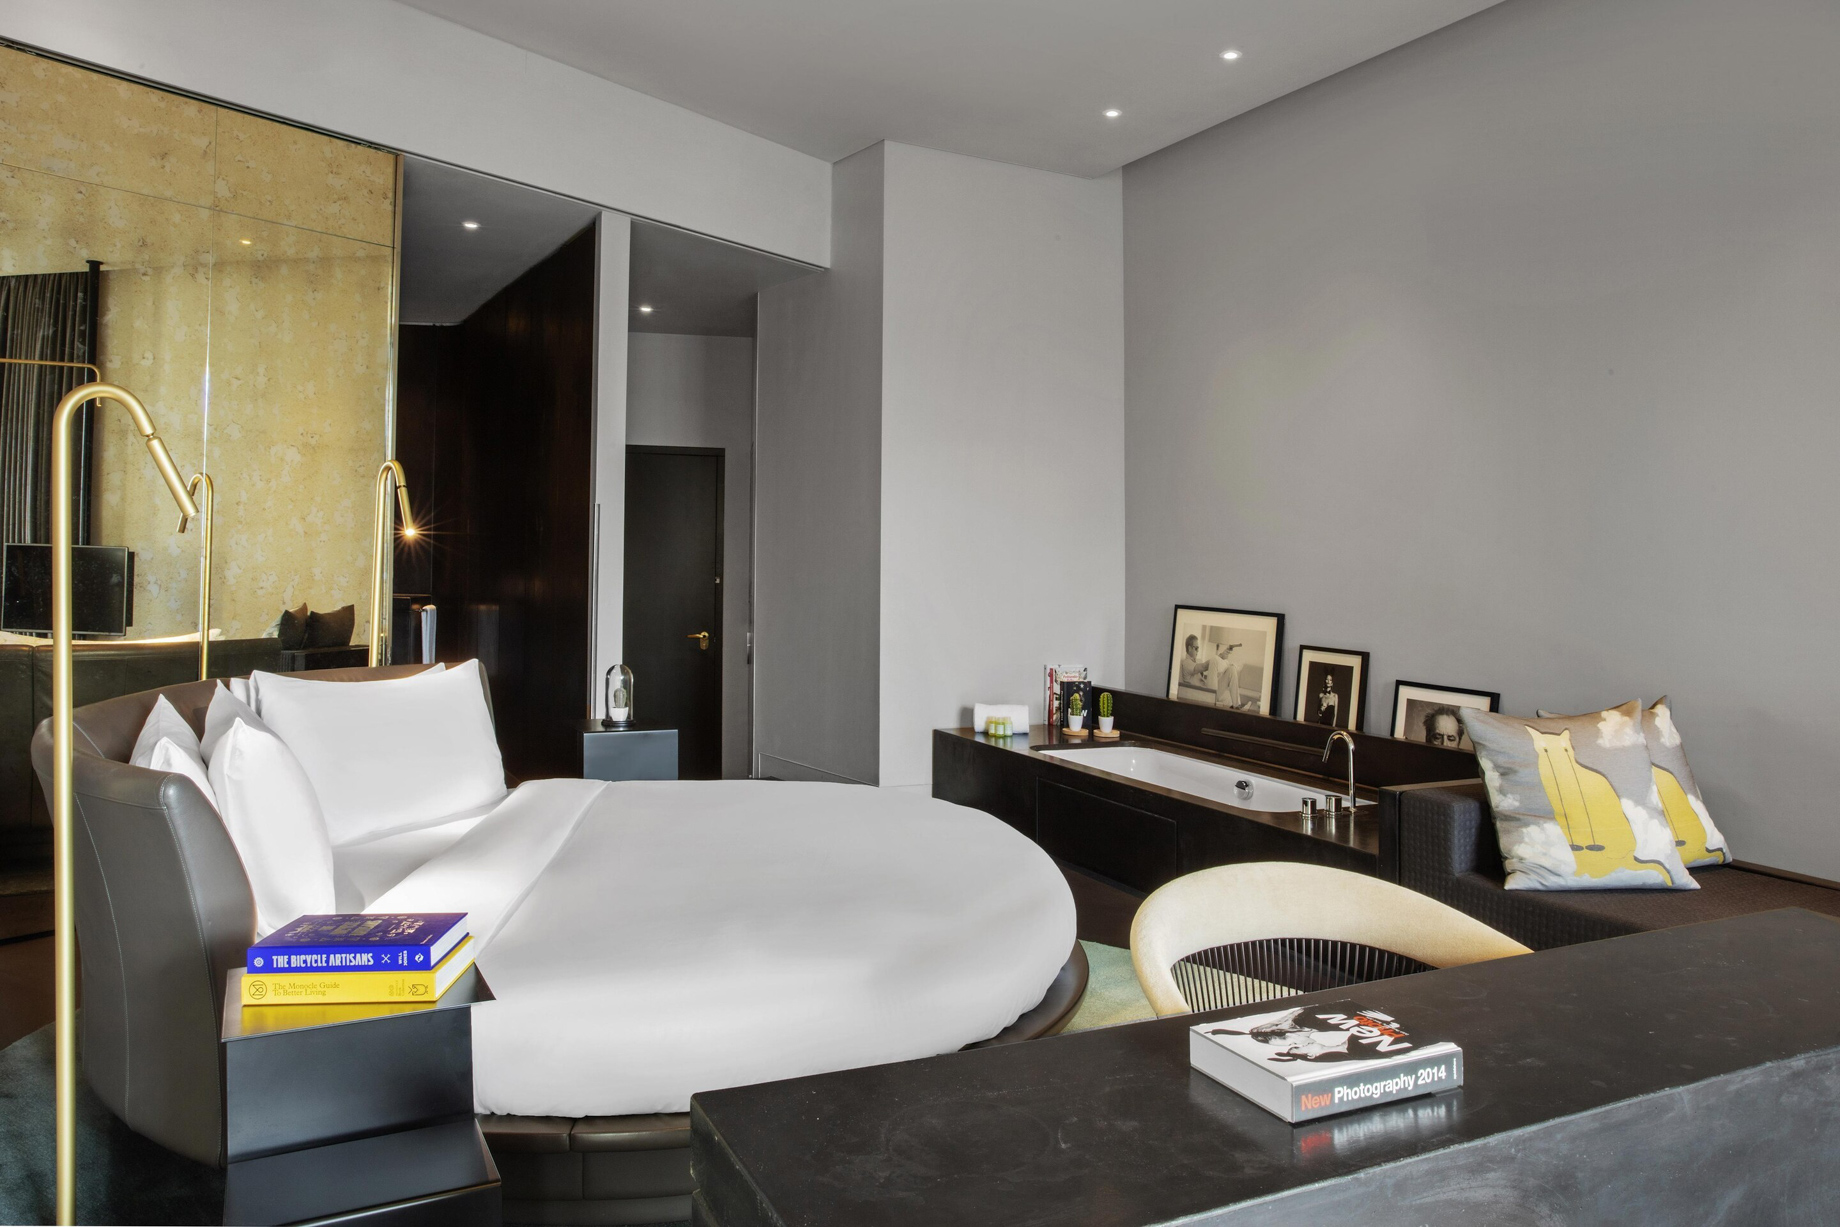 W Amsterdam Hotel – Amsterdam, Netherlands – WOW Bank One Bedroom Studio Suite